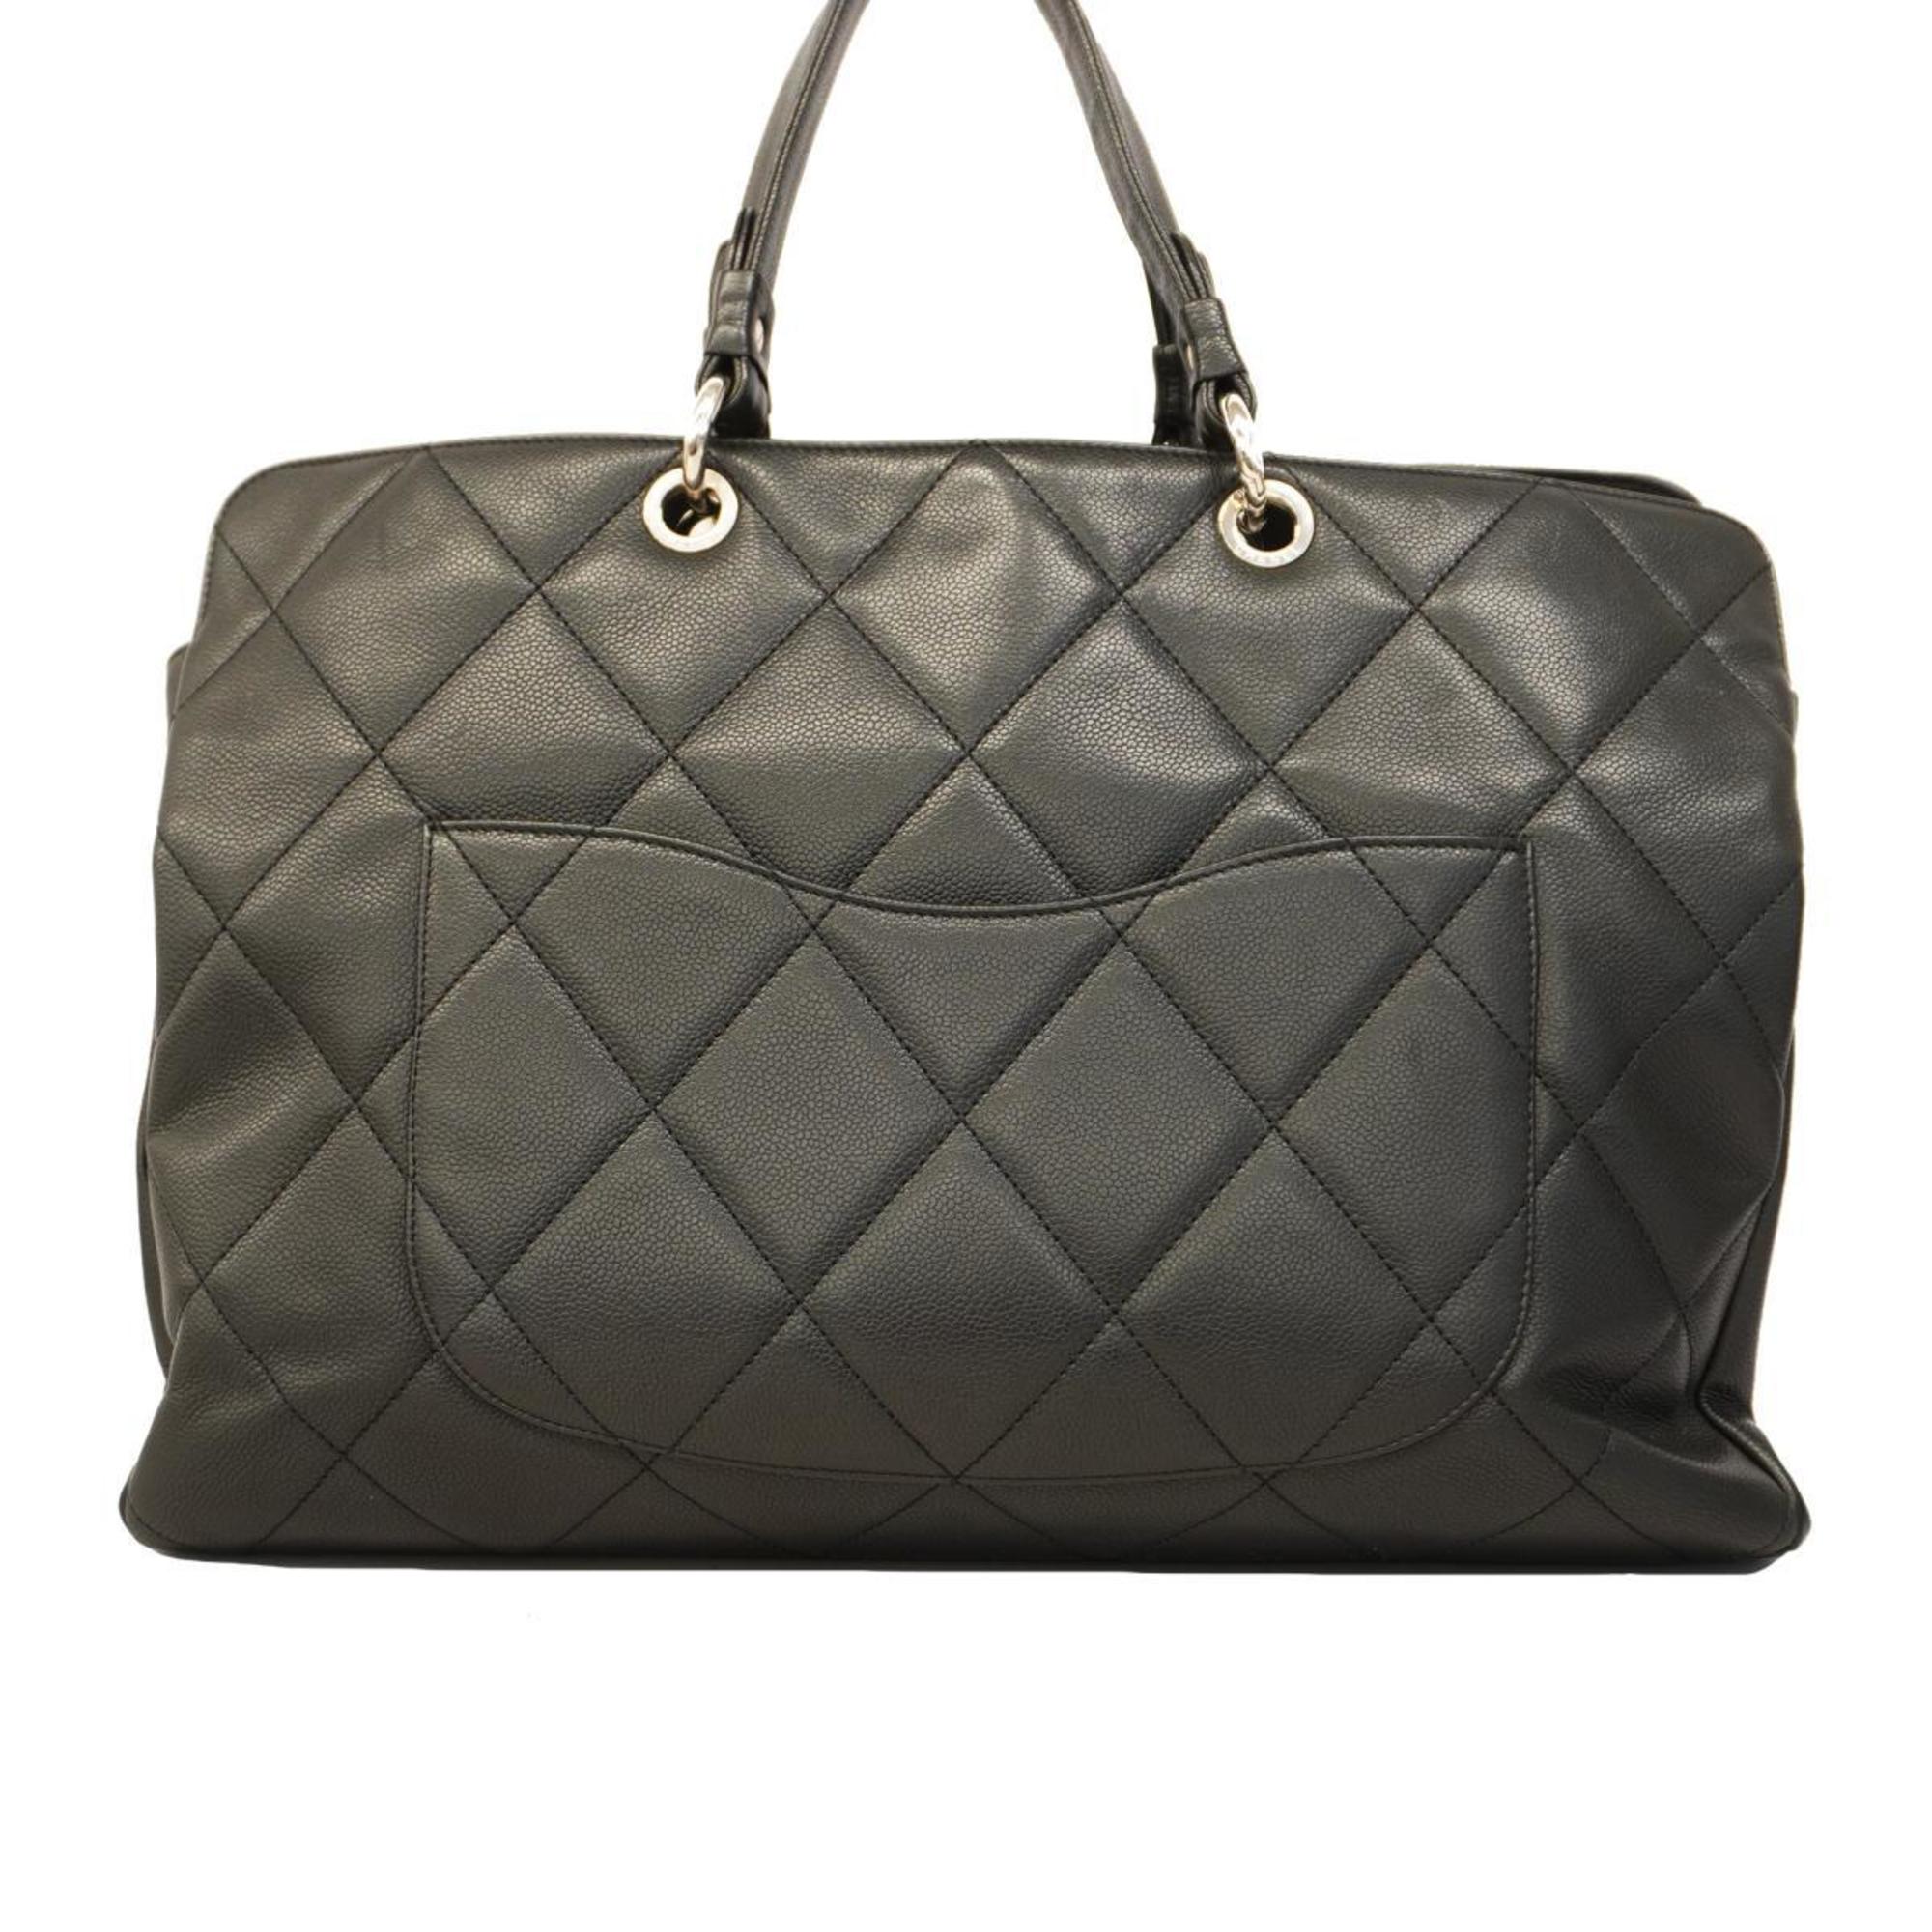 Chanel handbag, Matelasse, caviar skin, black, for men and women